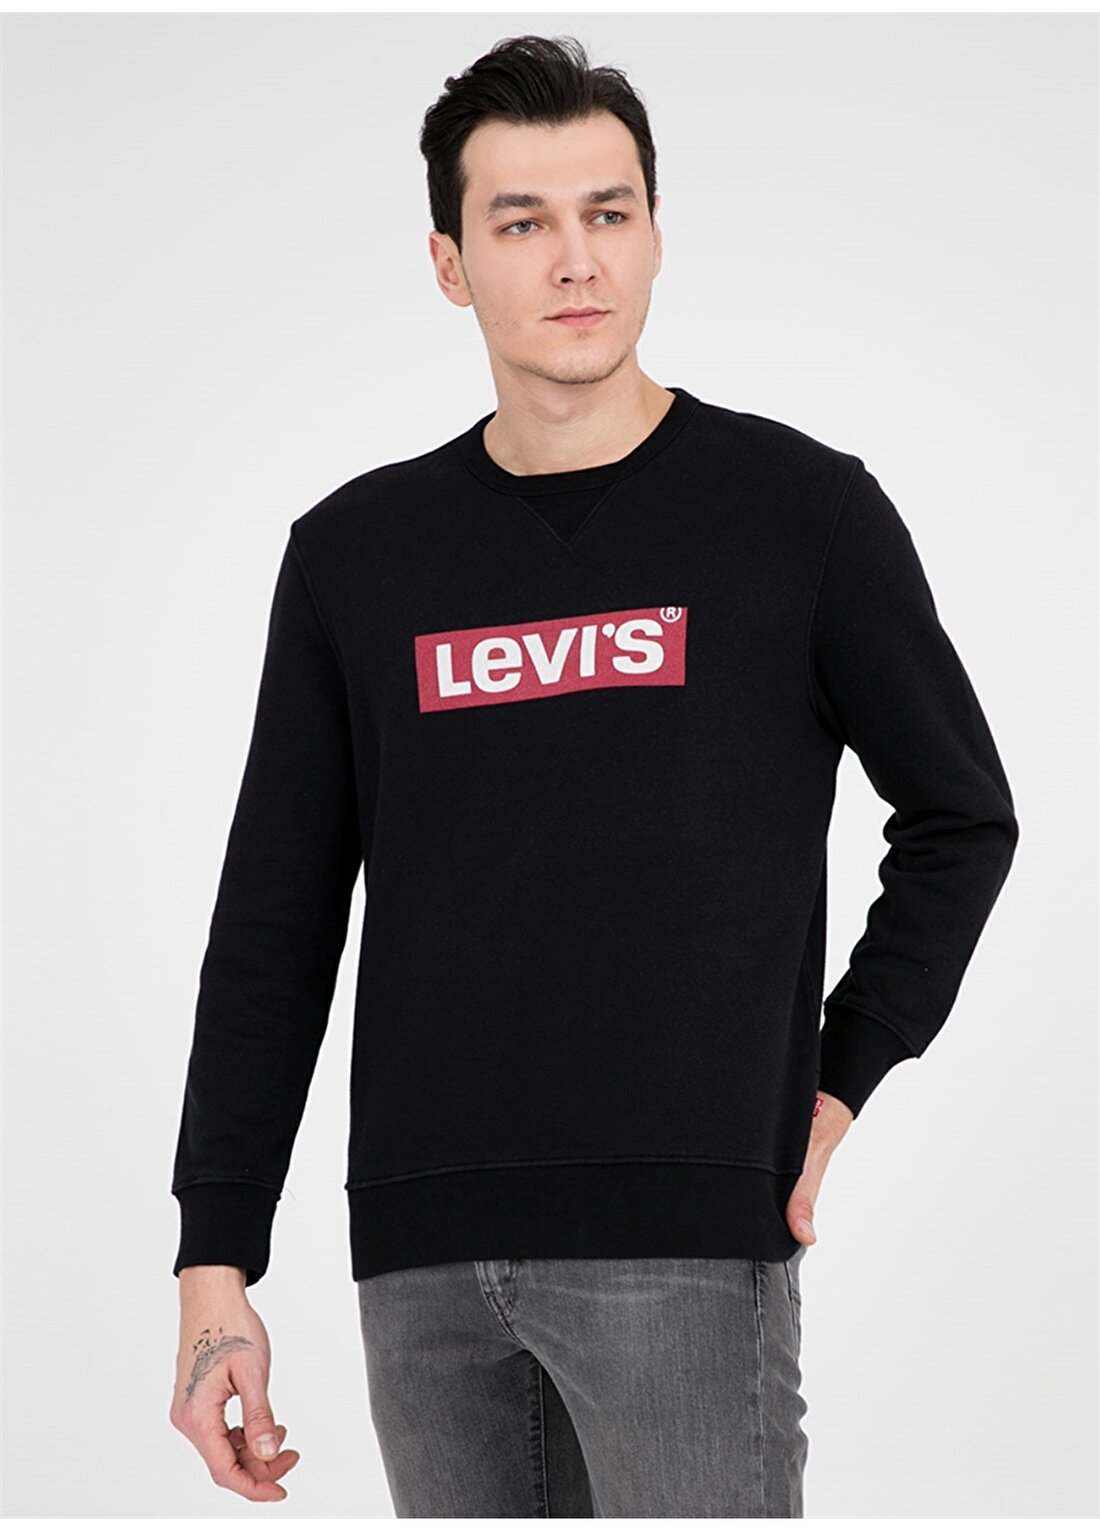 Levis Graphic Crew B Logo Ssnl Crew Mineral B Sweatshirt